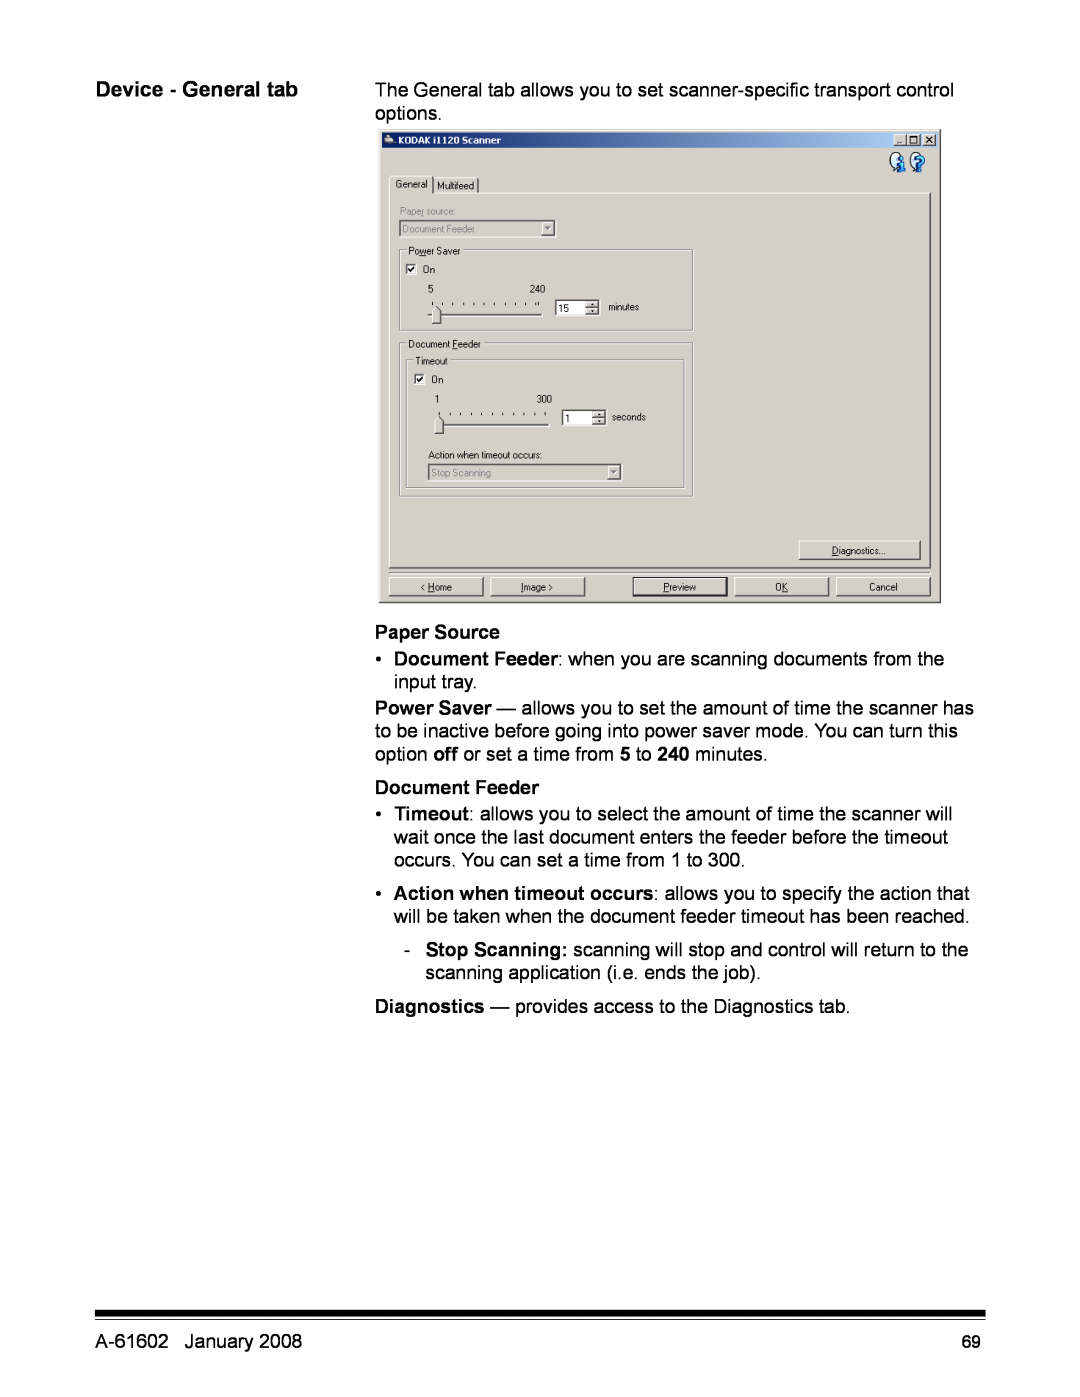 Kodak A-61602 manual Device - General tab, Paper Source, Document Feeder 